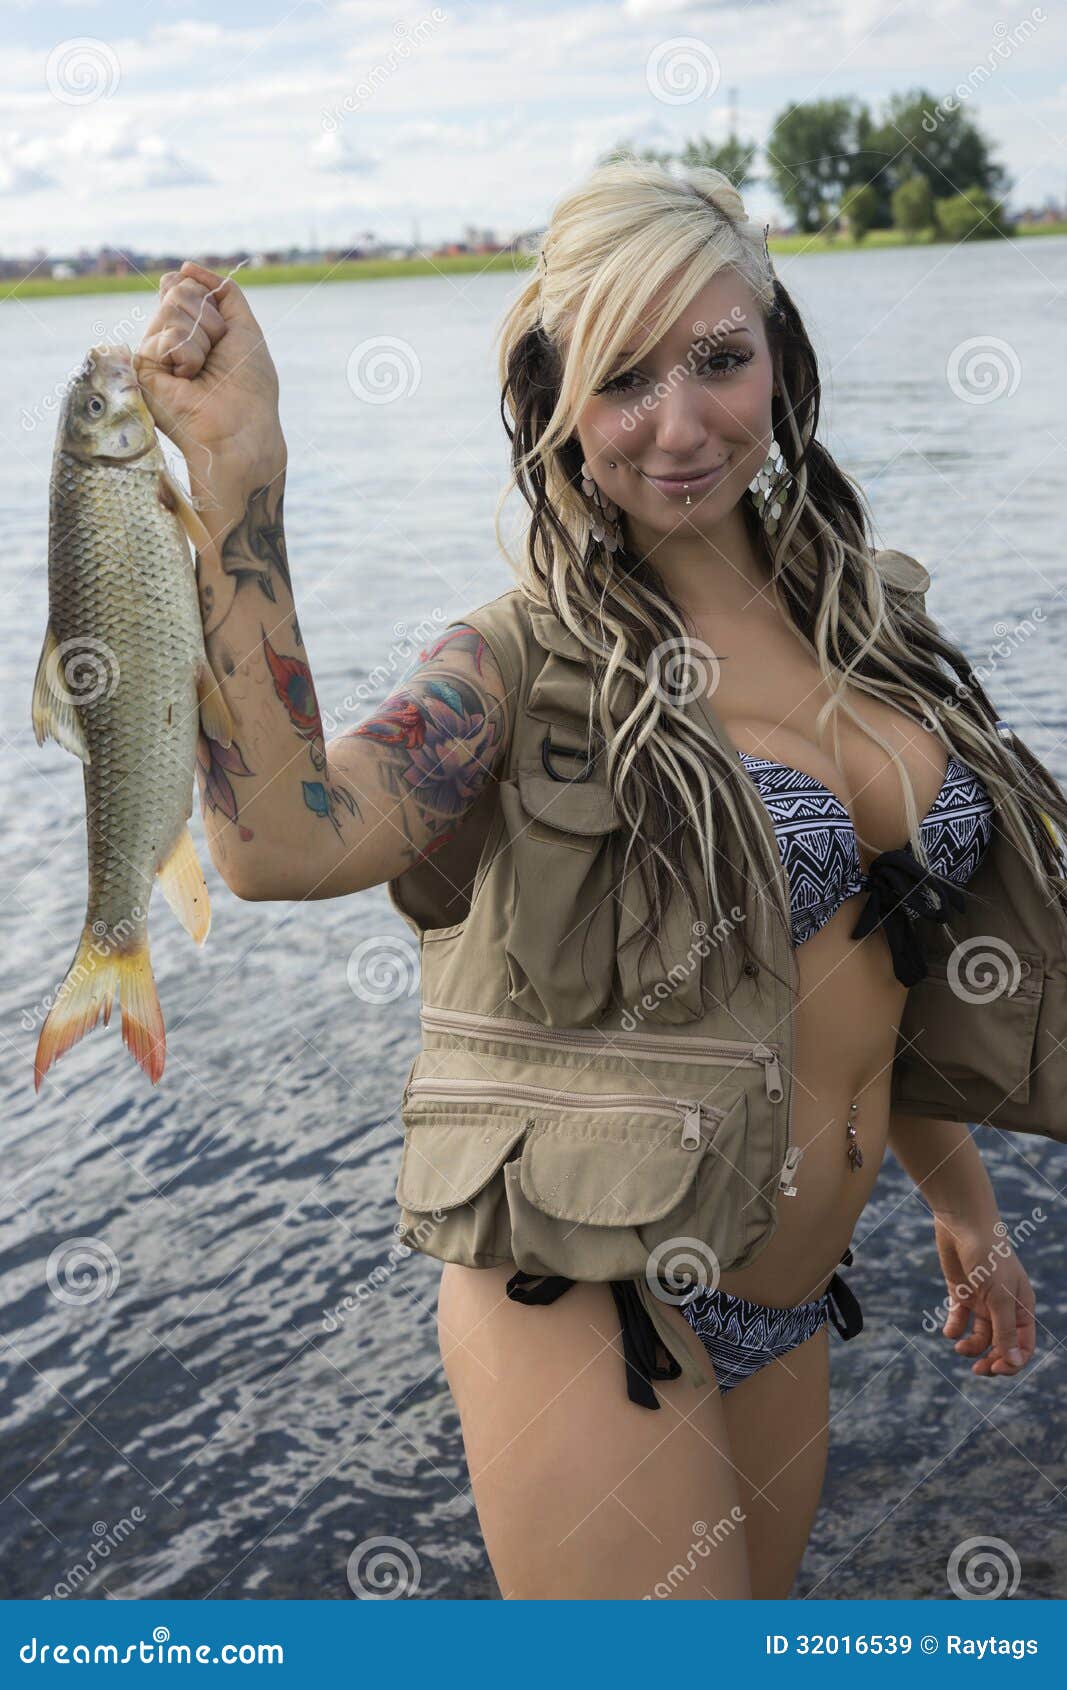 angler with fish